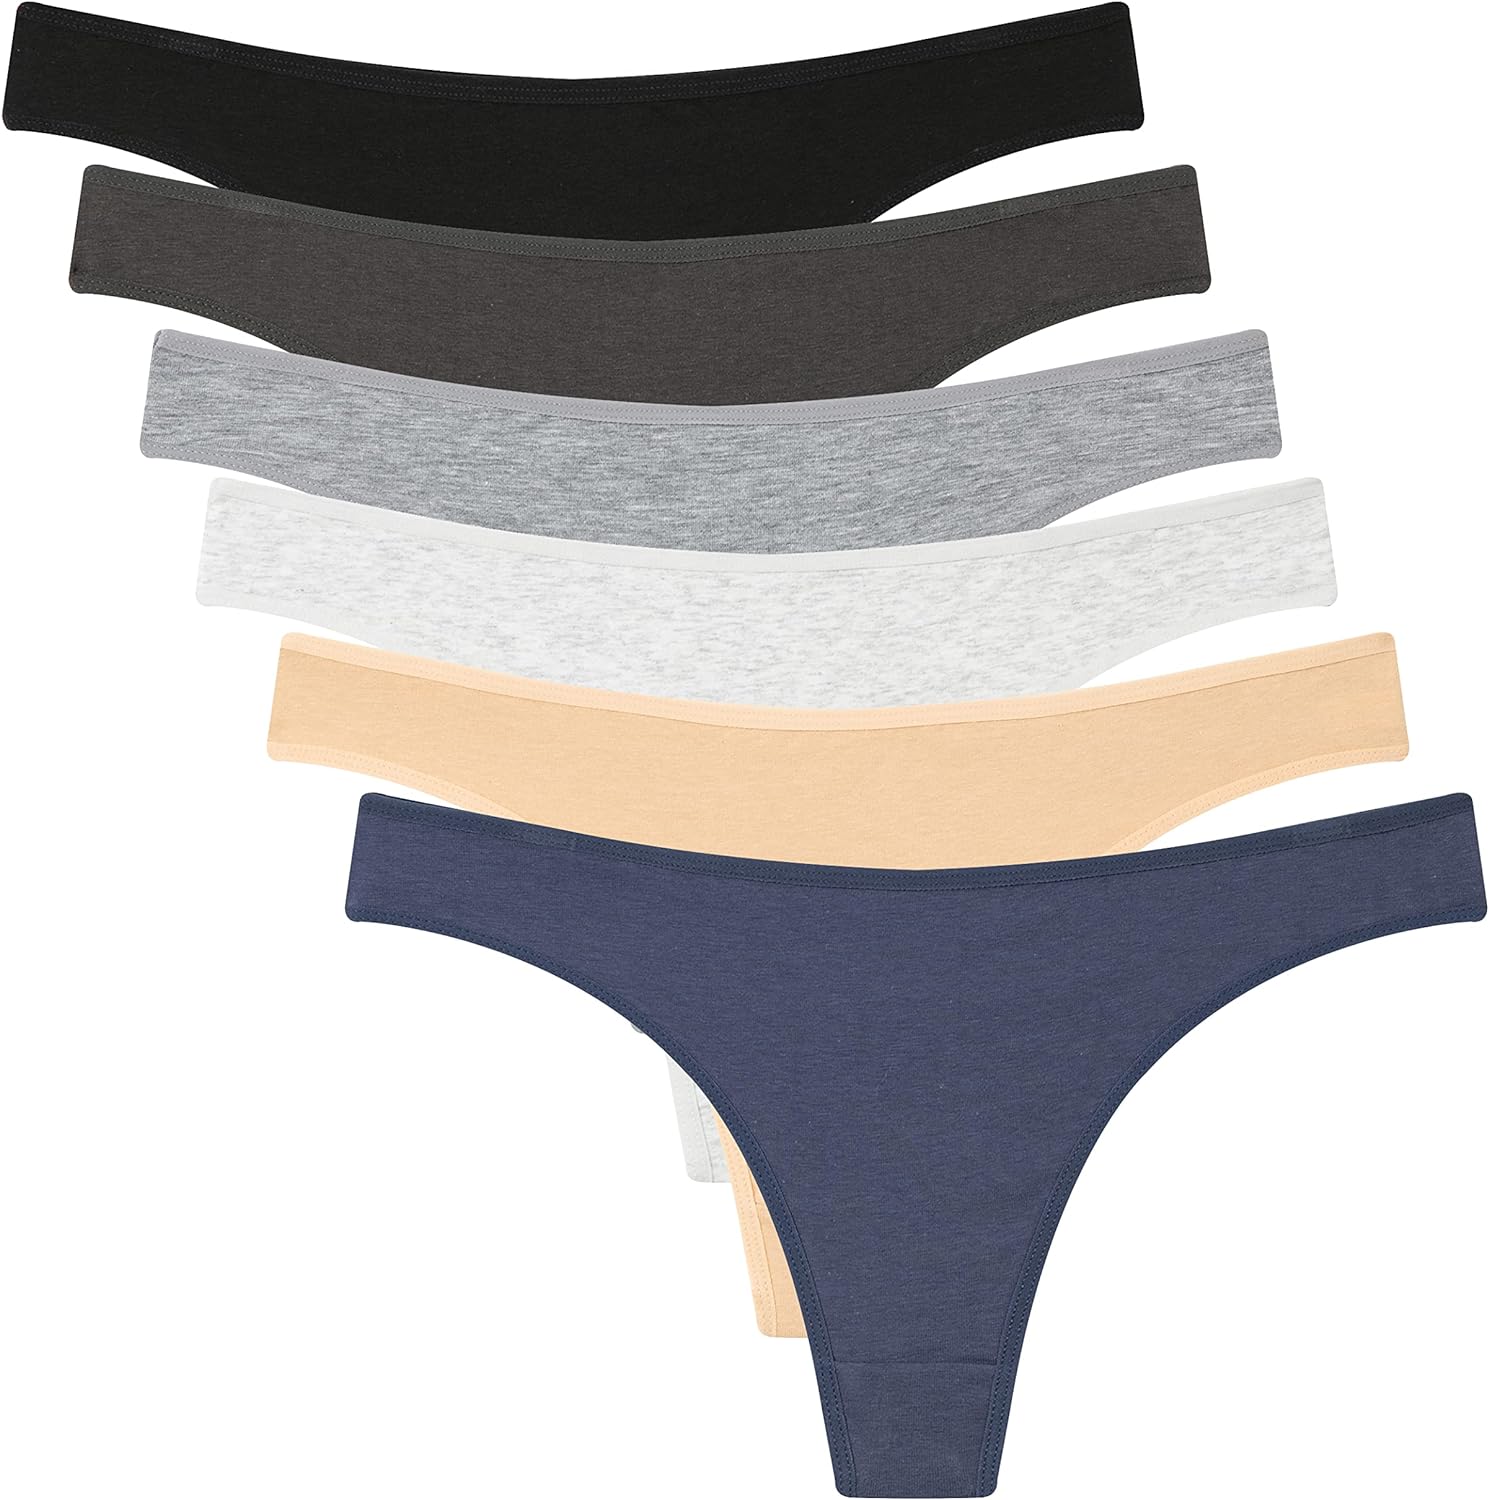 Go, Grab It Now! ELACUCOS 6 Pack Women's Thongs Cotton Breathable Panties Bikini Underwear Medium - Limited-Time Discounts